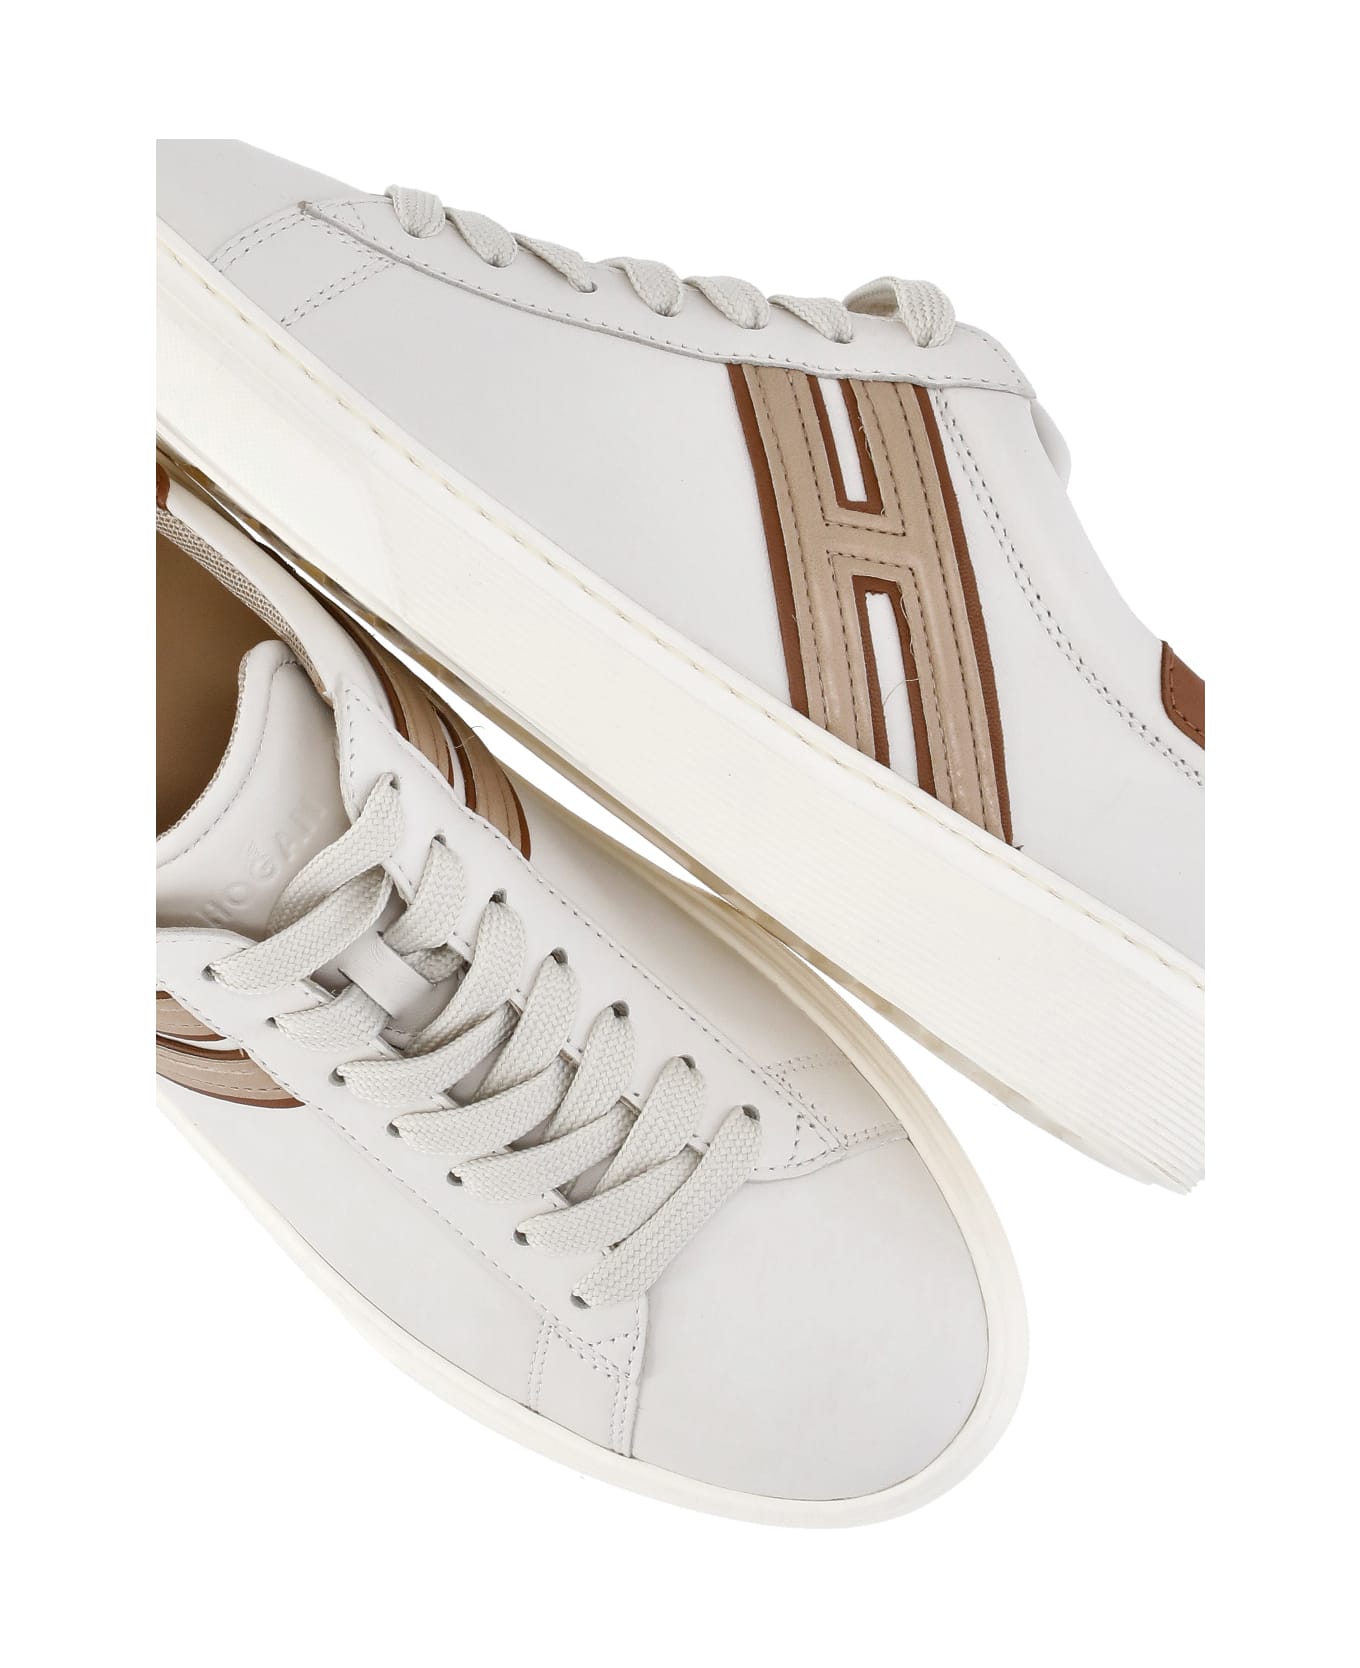 Hogan Sneakers "h365" In Leather - Avorio スニーカー